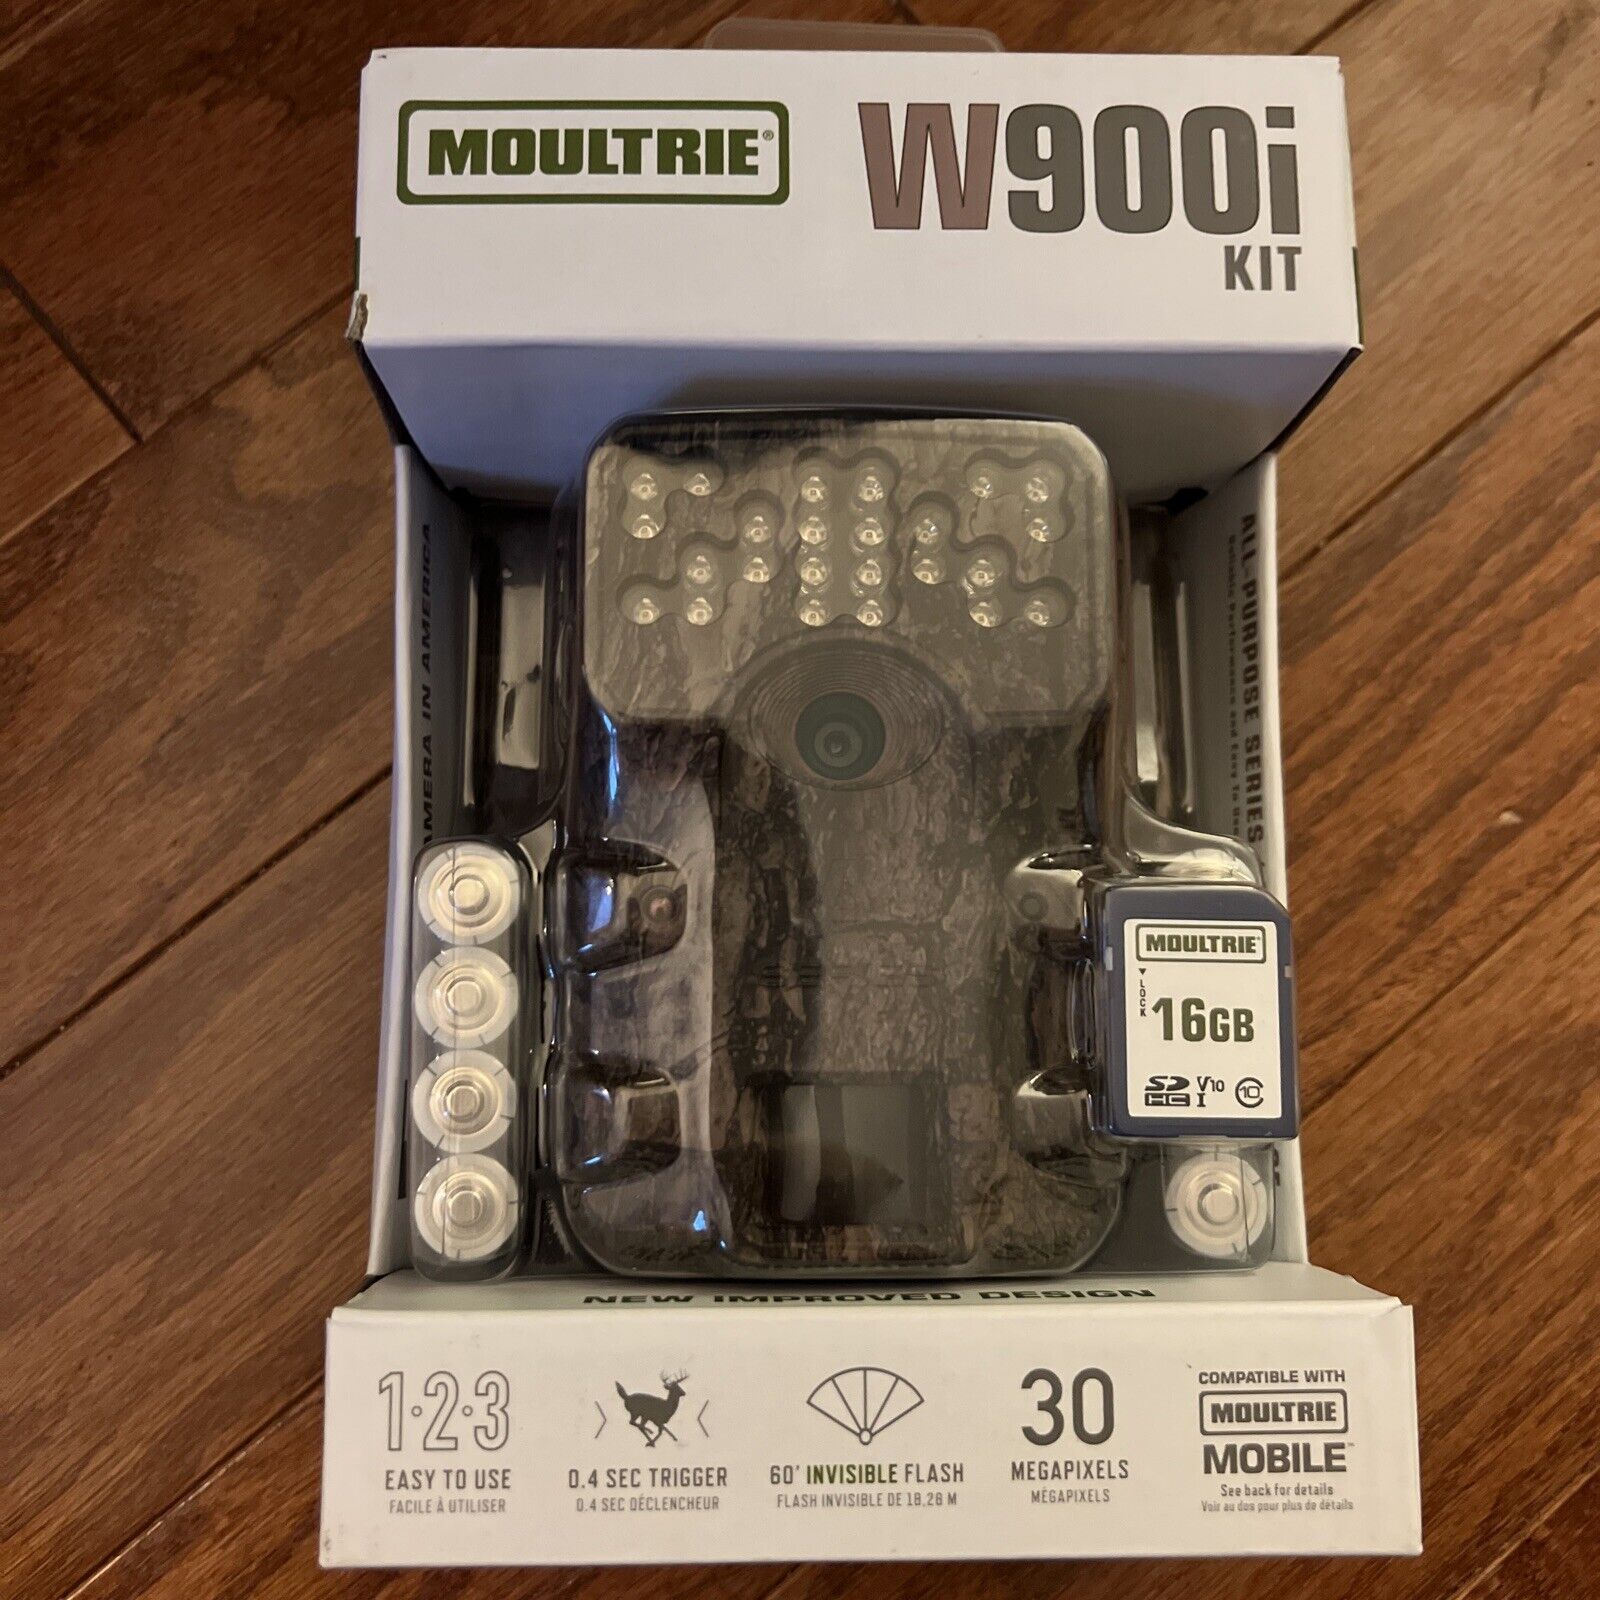 Moultrie W900i Kit 30 Megapixels 0.4 Sec. Trigger 60' Invisible Flash